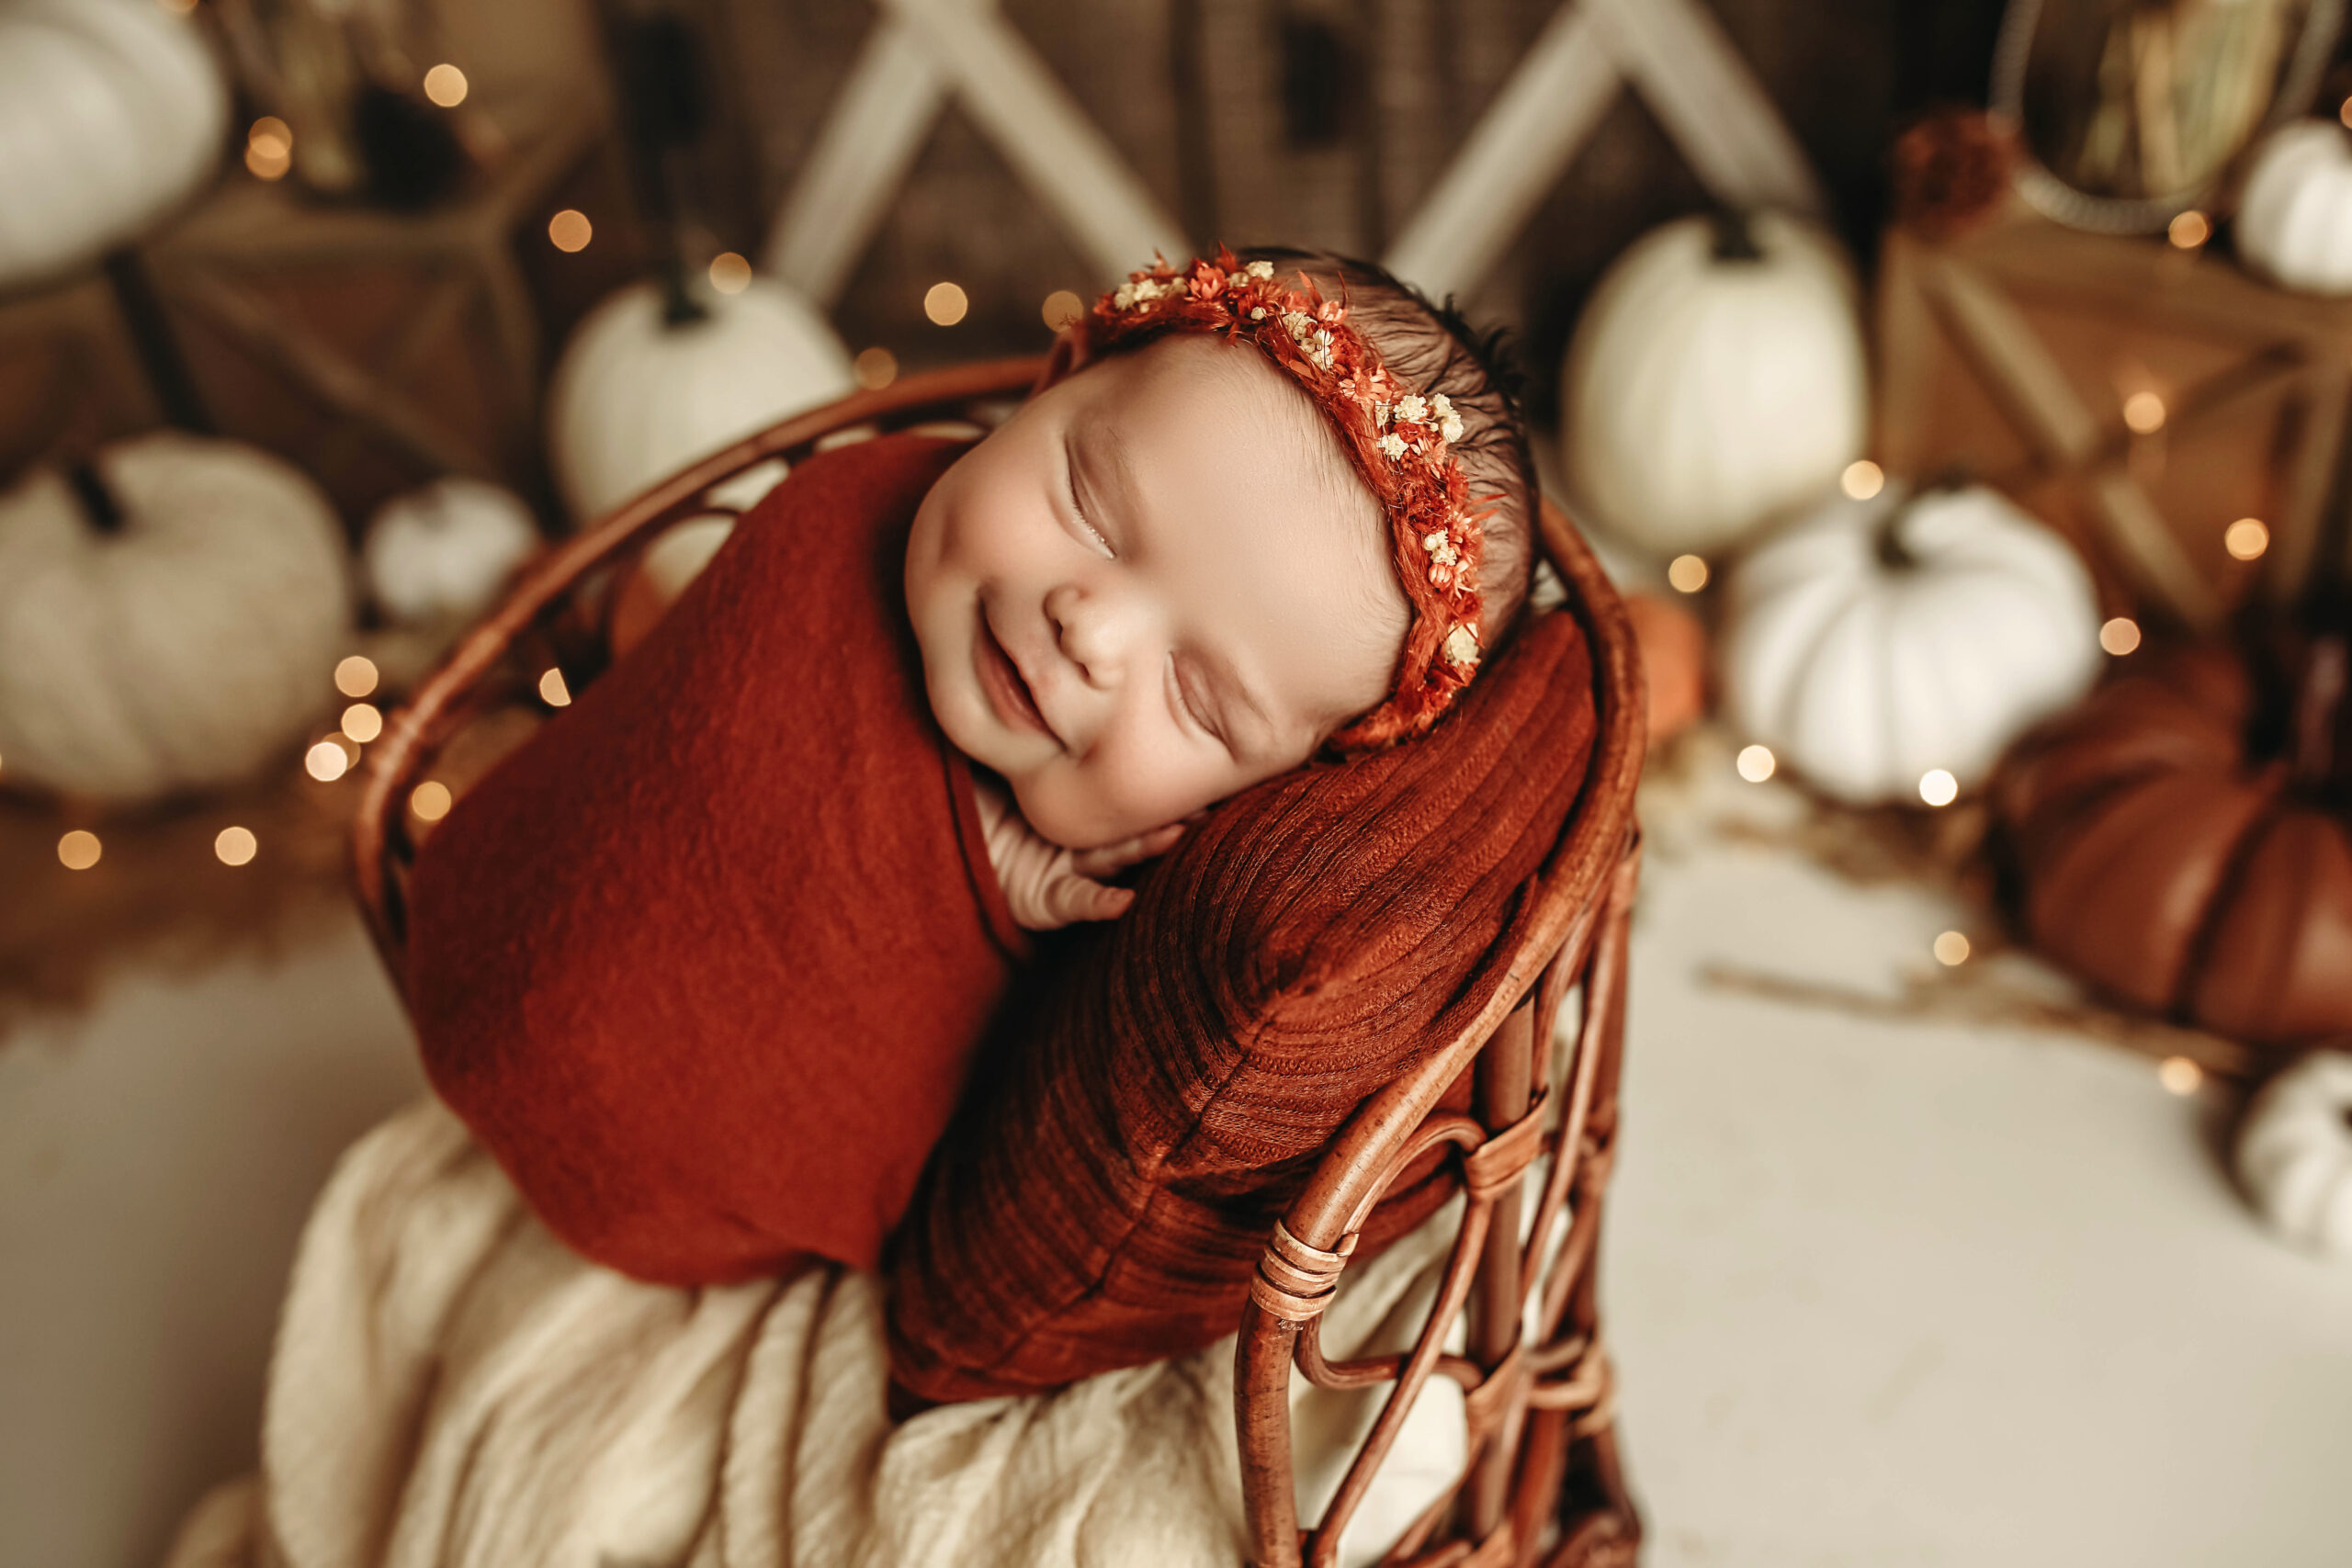 oklahoma newborn photographer